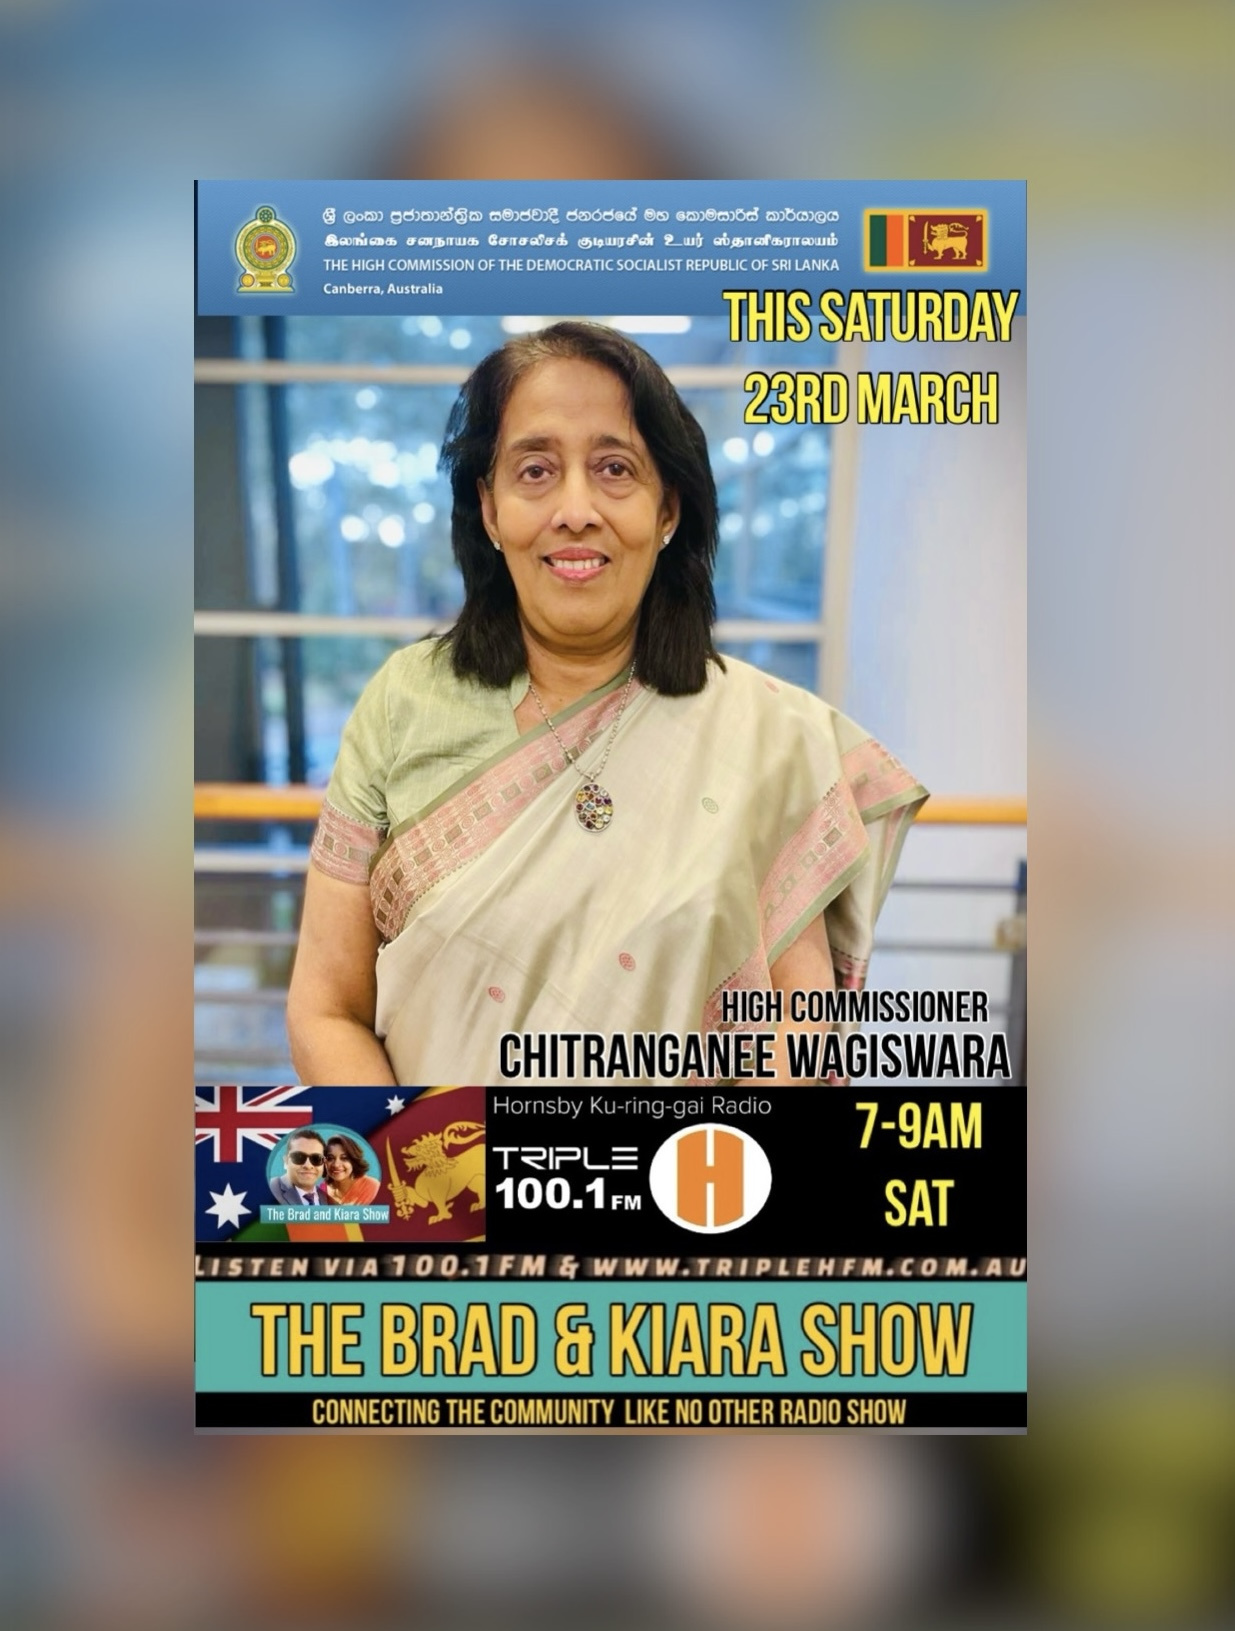 The Brad & Kiara Show This Weekend An Exclusive with Chitranganee Wagiswara Sri Lankan High Commissioner in Australia